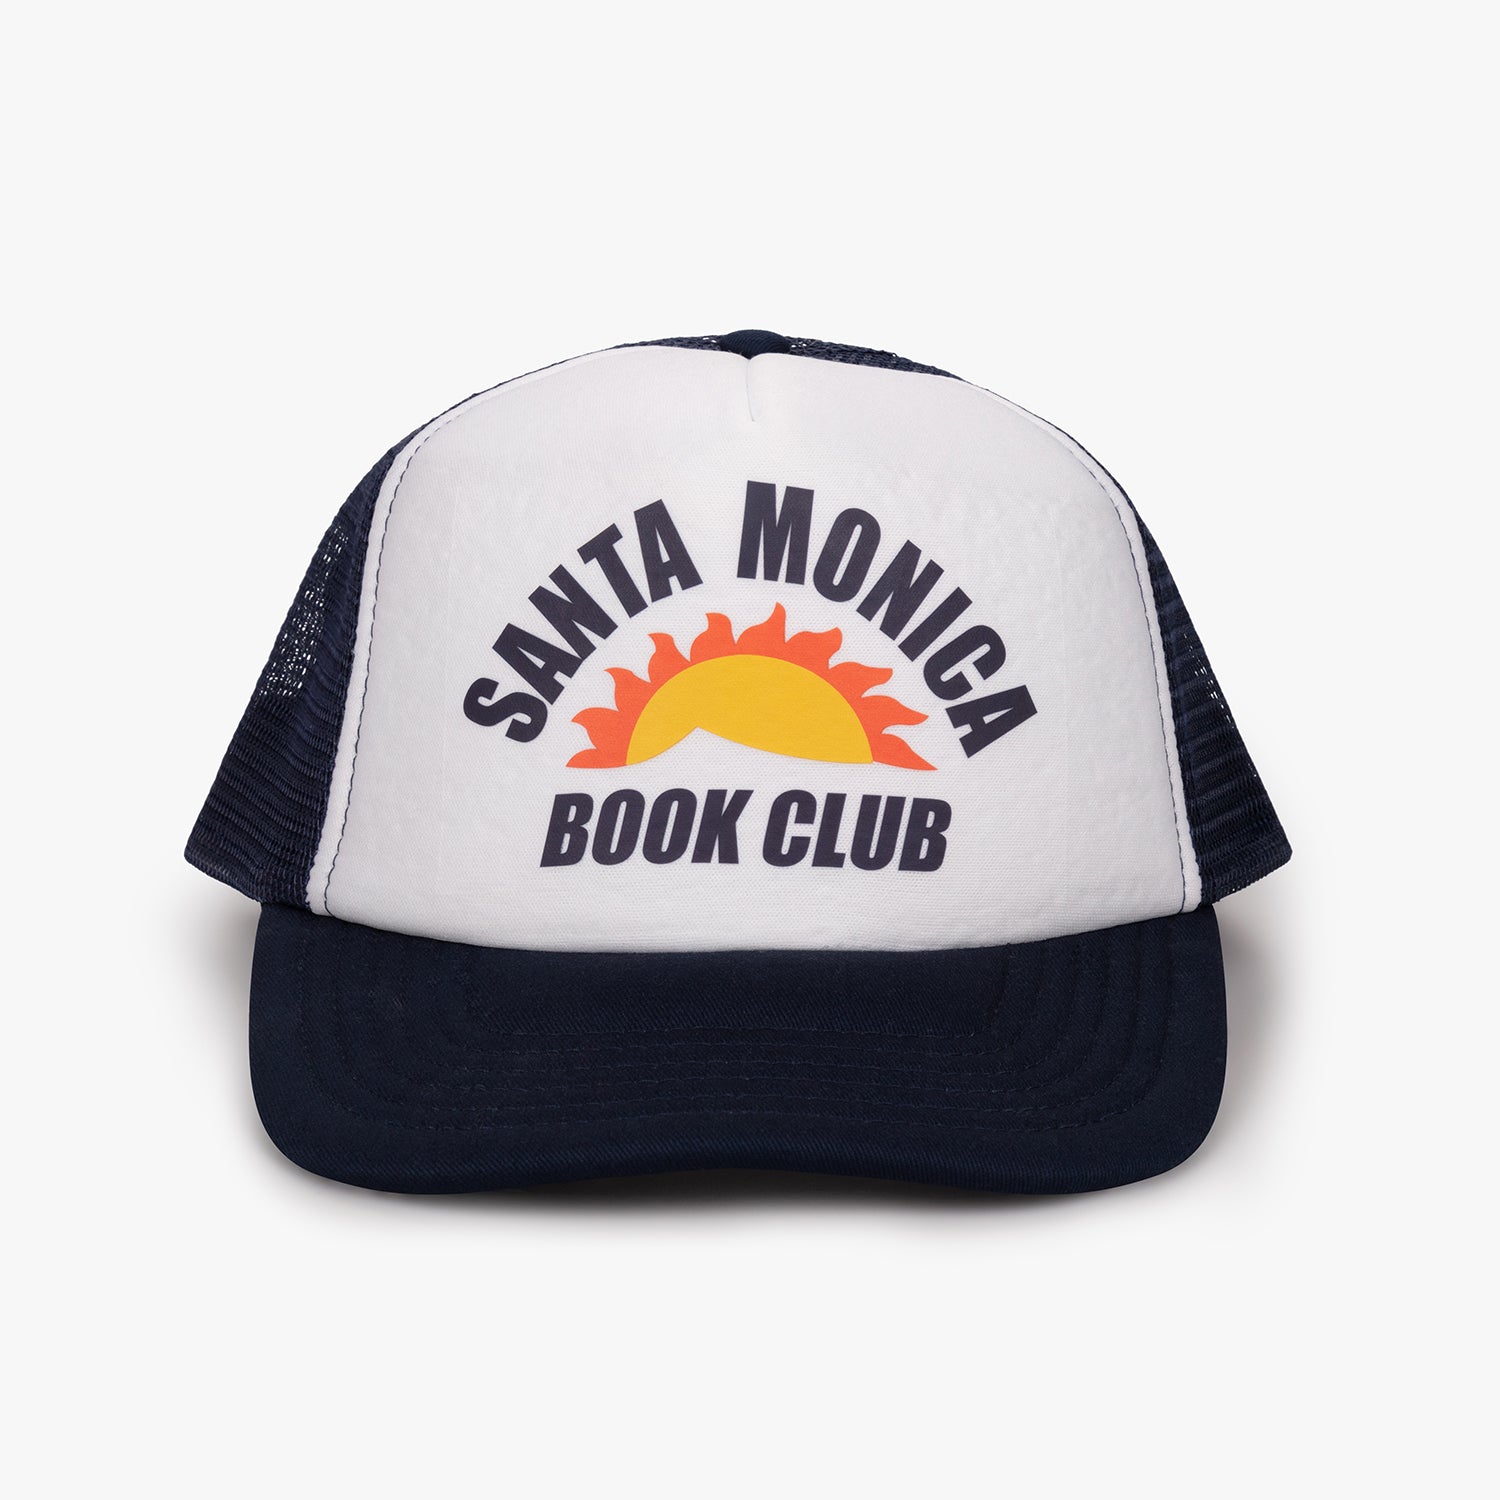 BOOK CLUB Trucker Hat